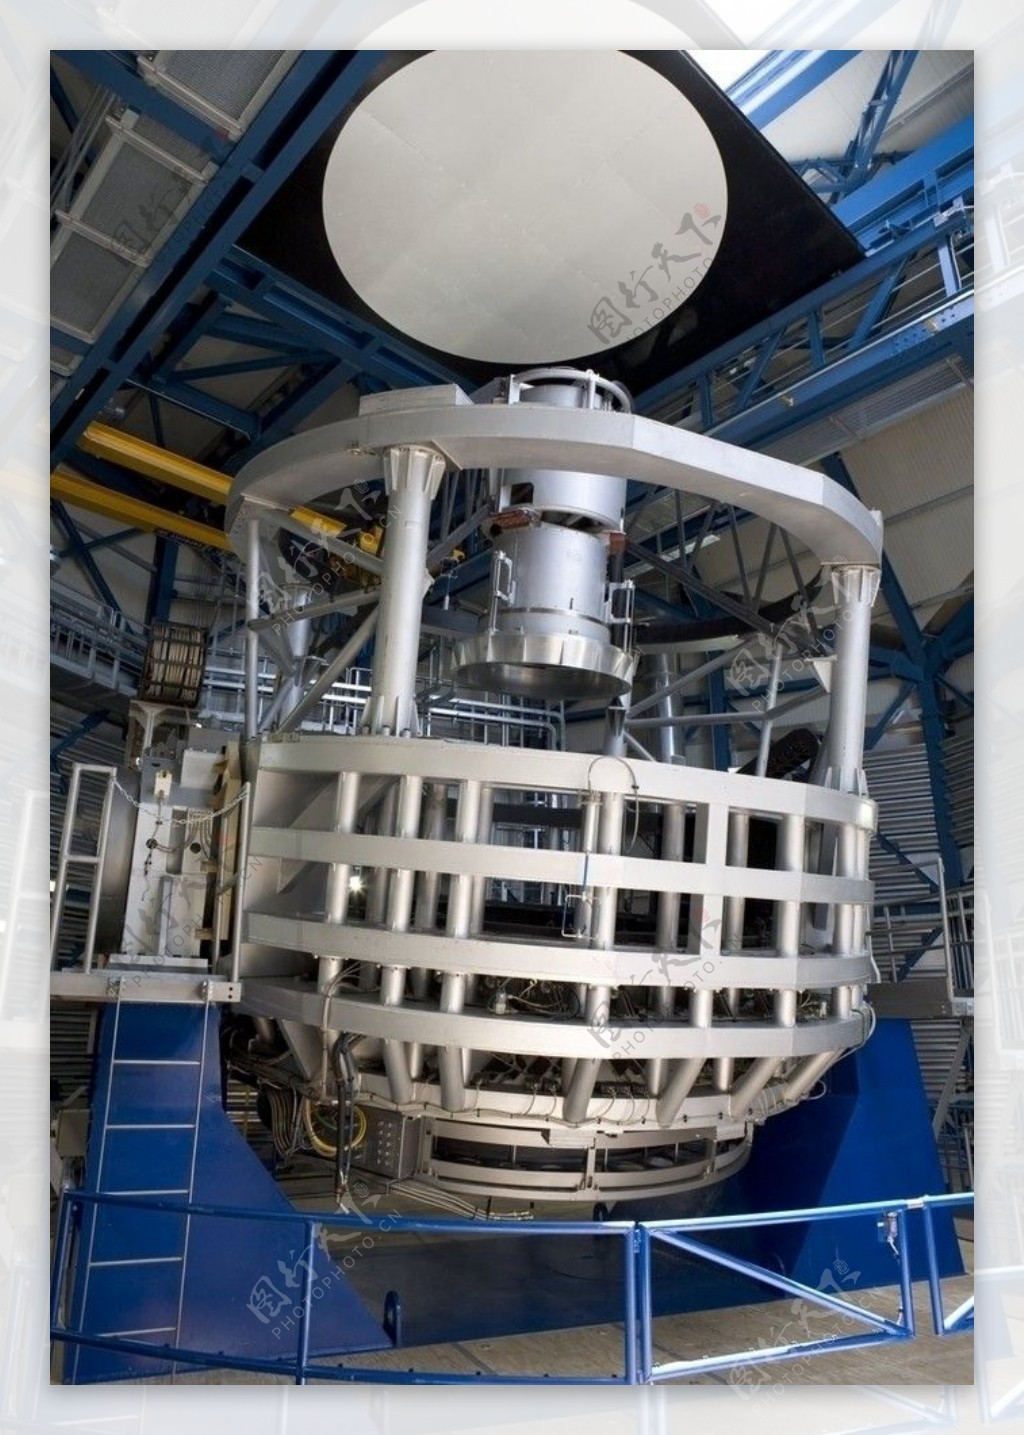 VISTA望远镜的主要部件及其保护罩图片